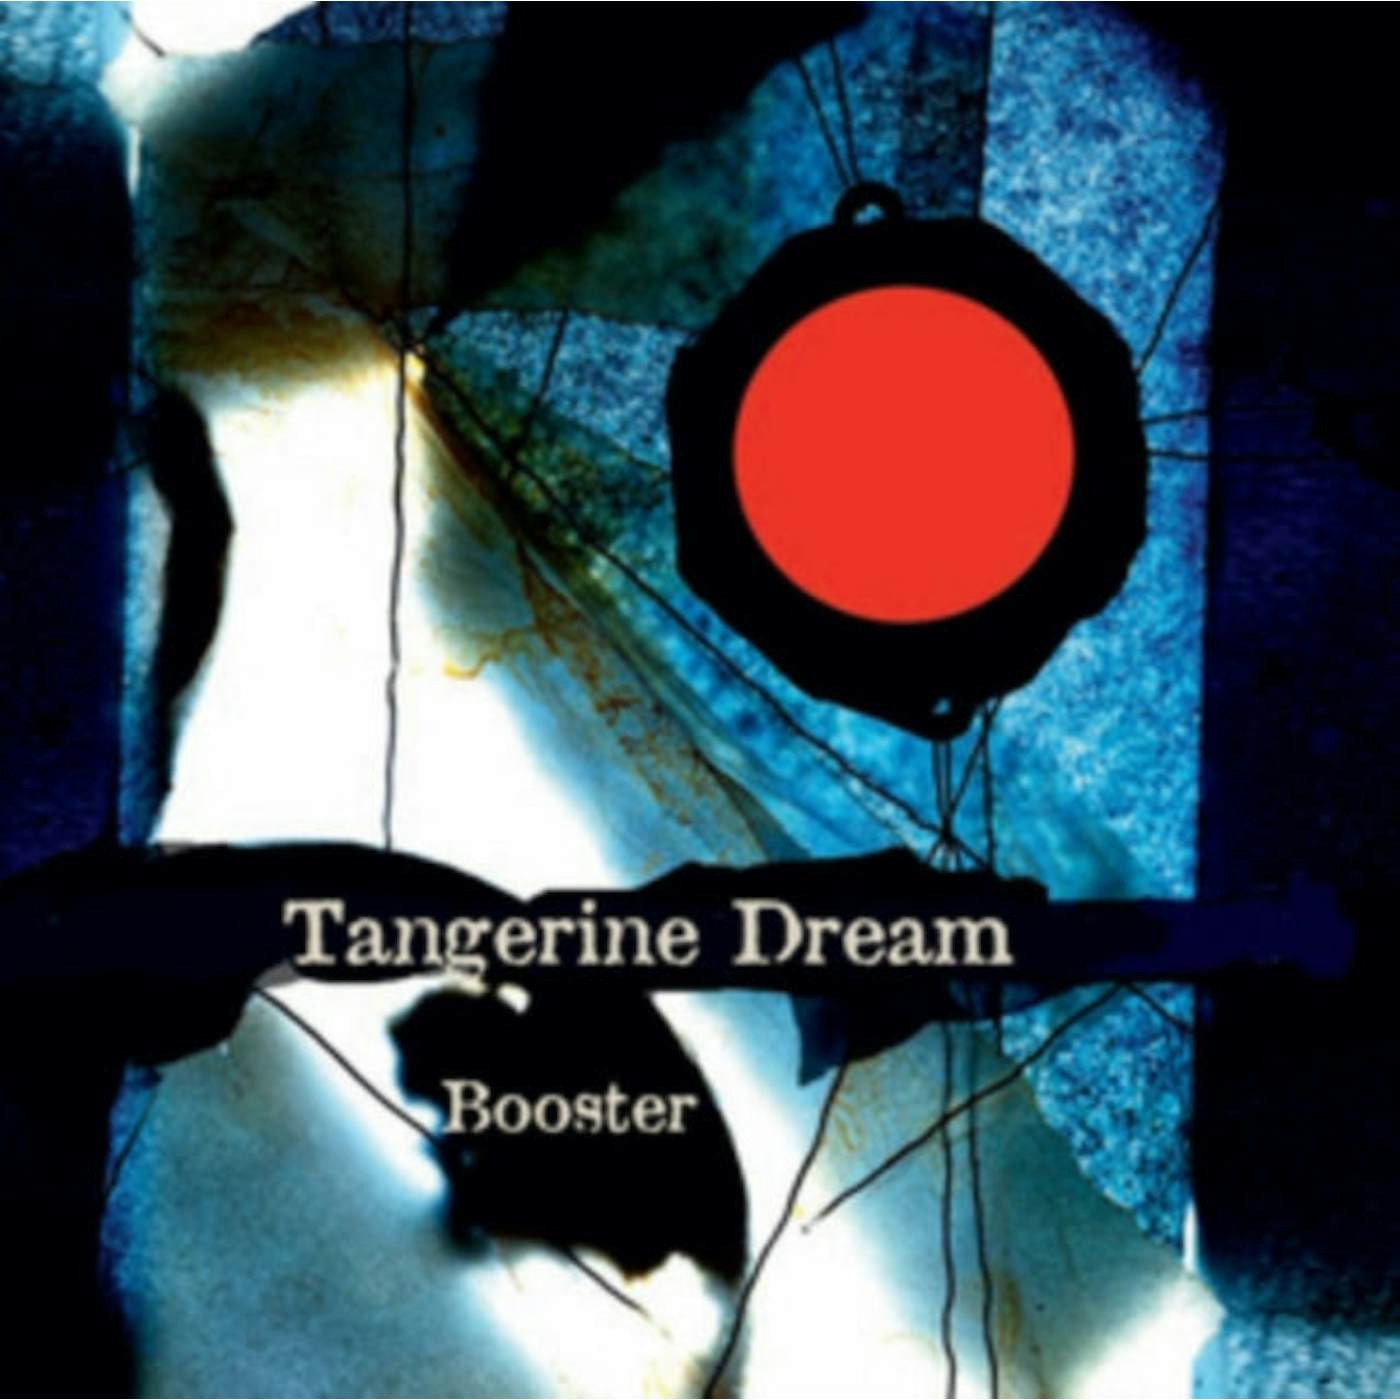 Tangerine Dream LP - Booster (Vinyl)